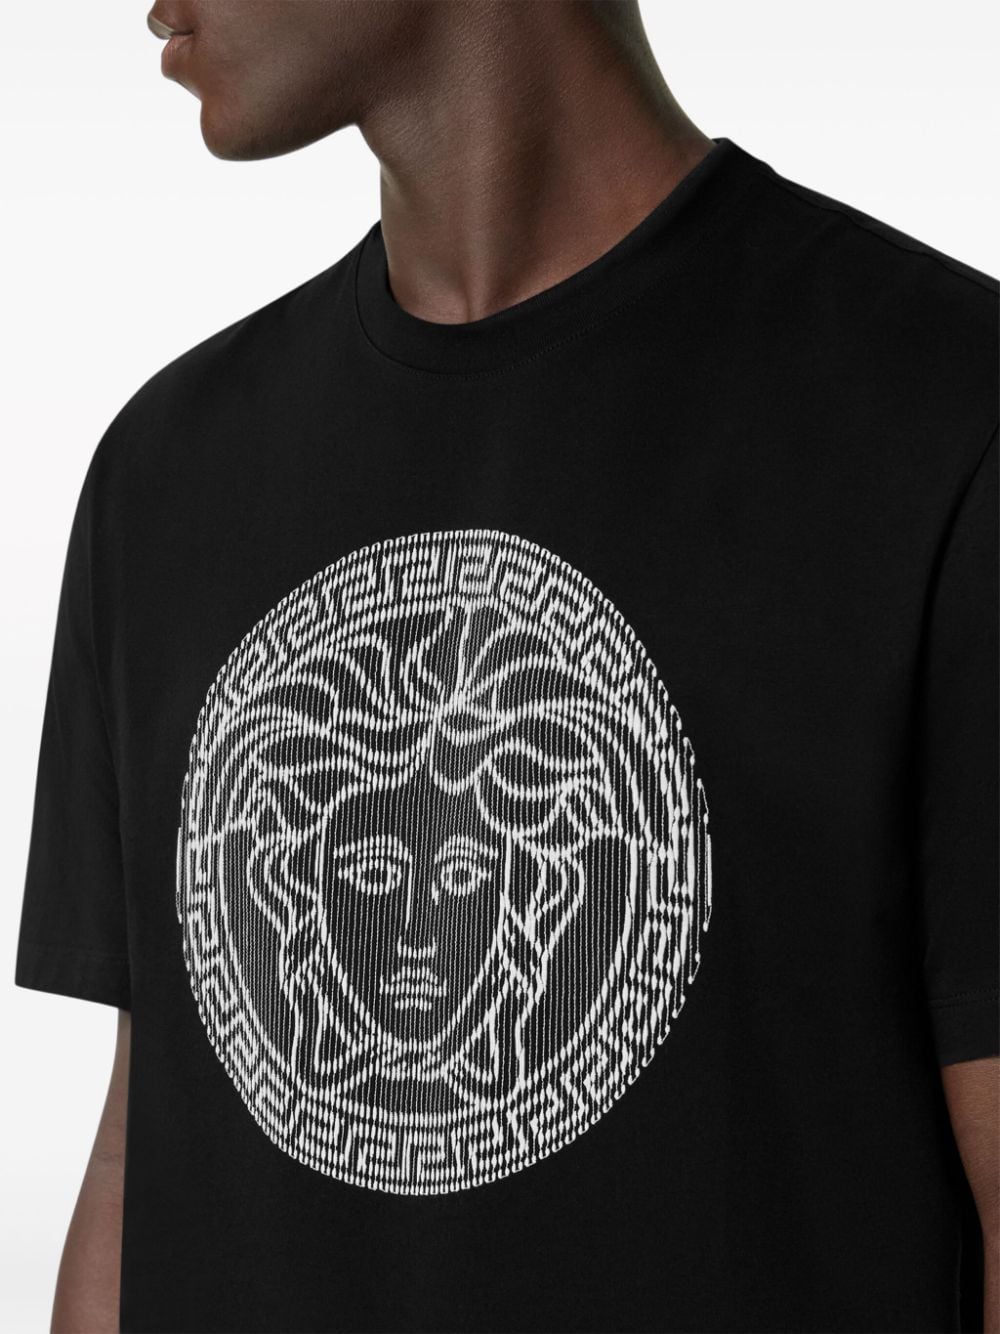 T-shirt in cotone con Medusa Sliced<br><br><br>